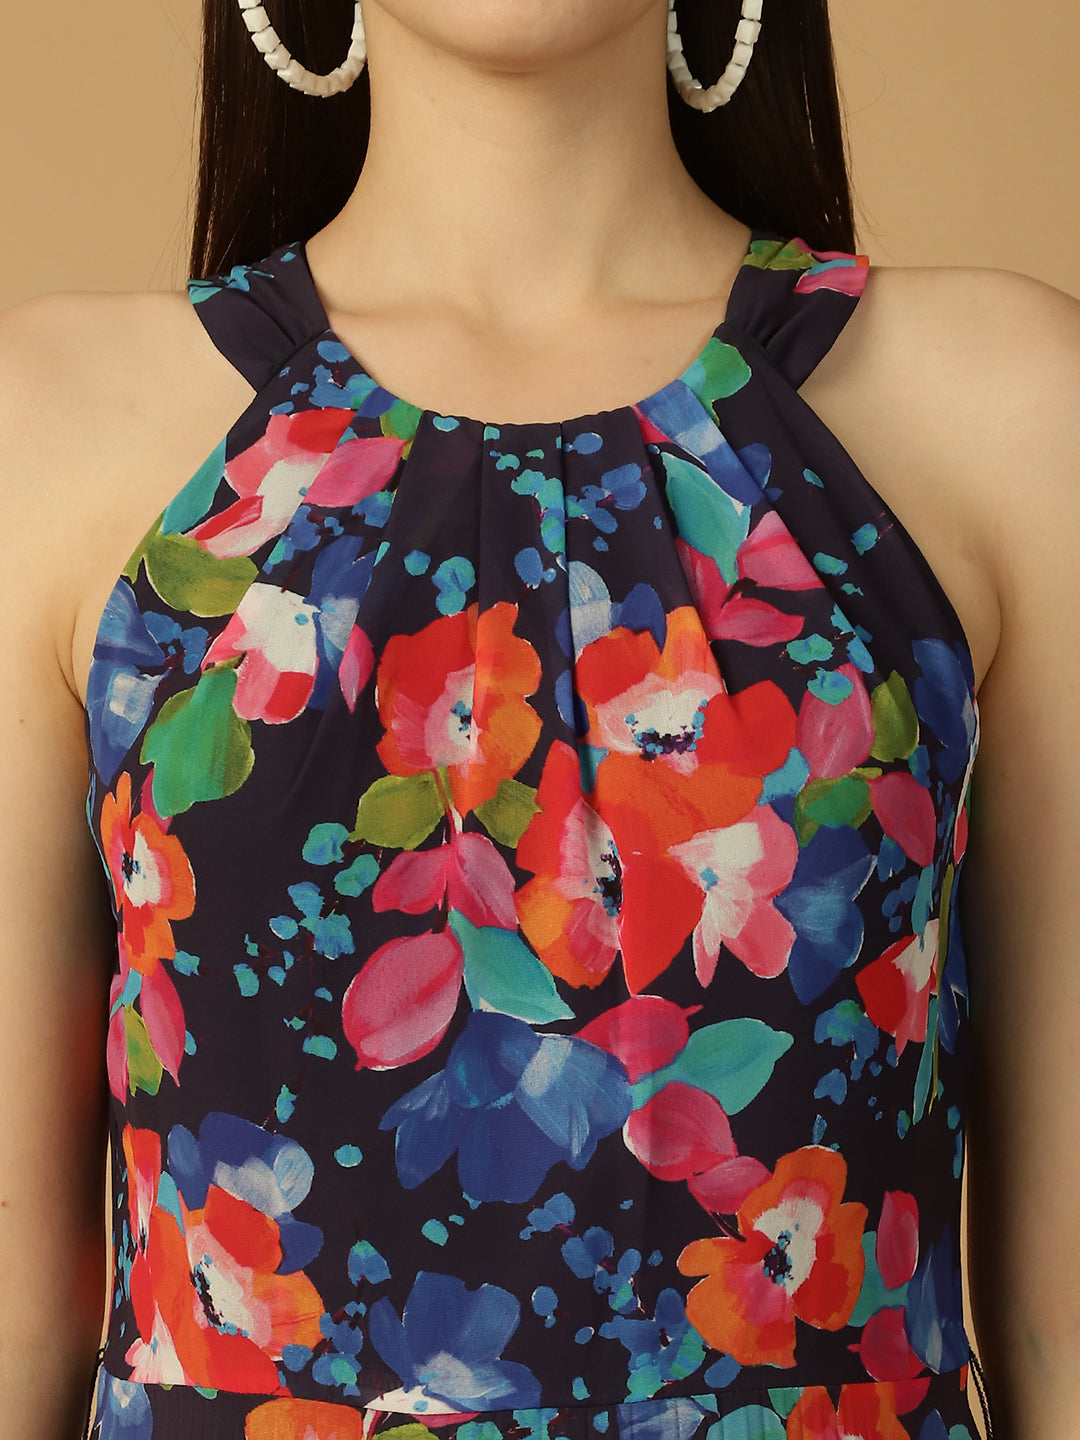 Floral Print Pleated Maxi Dress